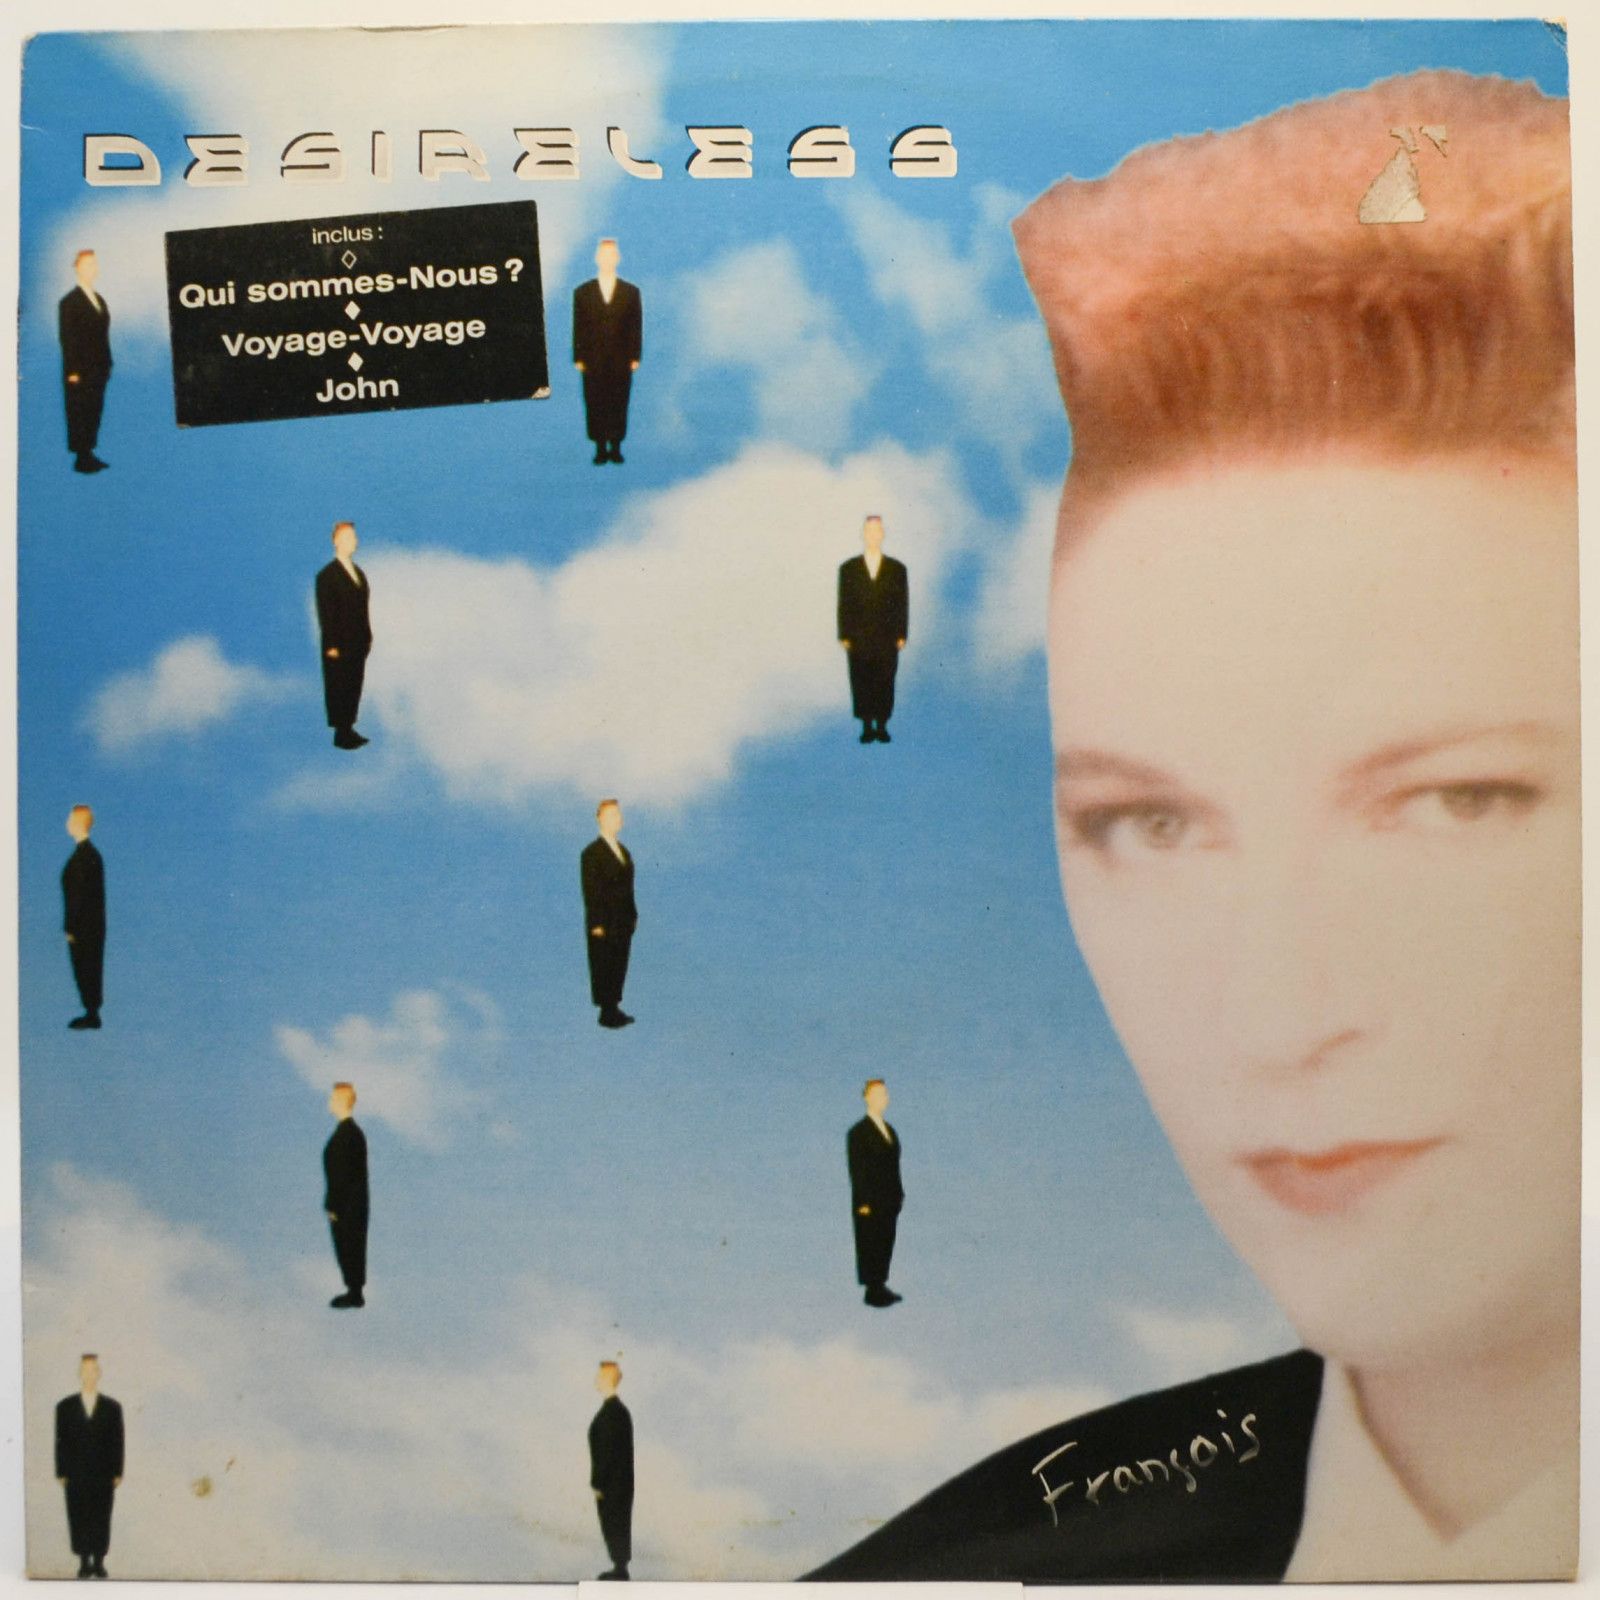 Desireless — François, 1989